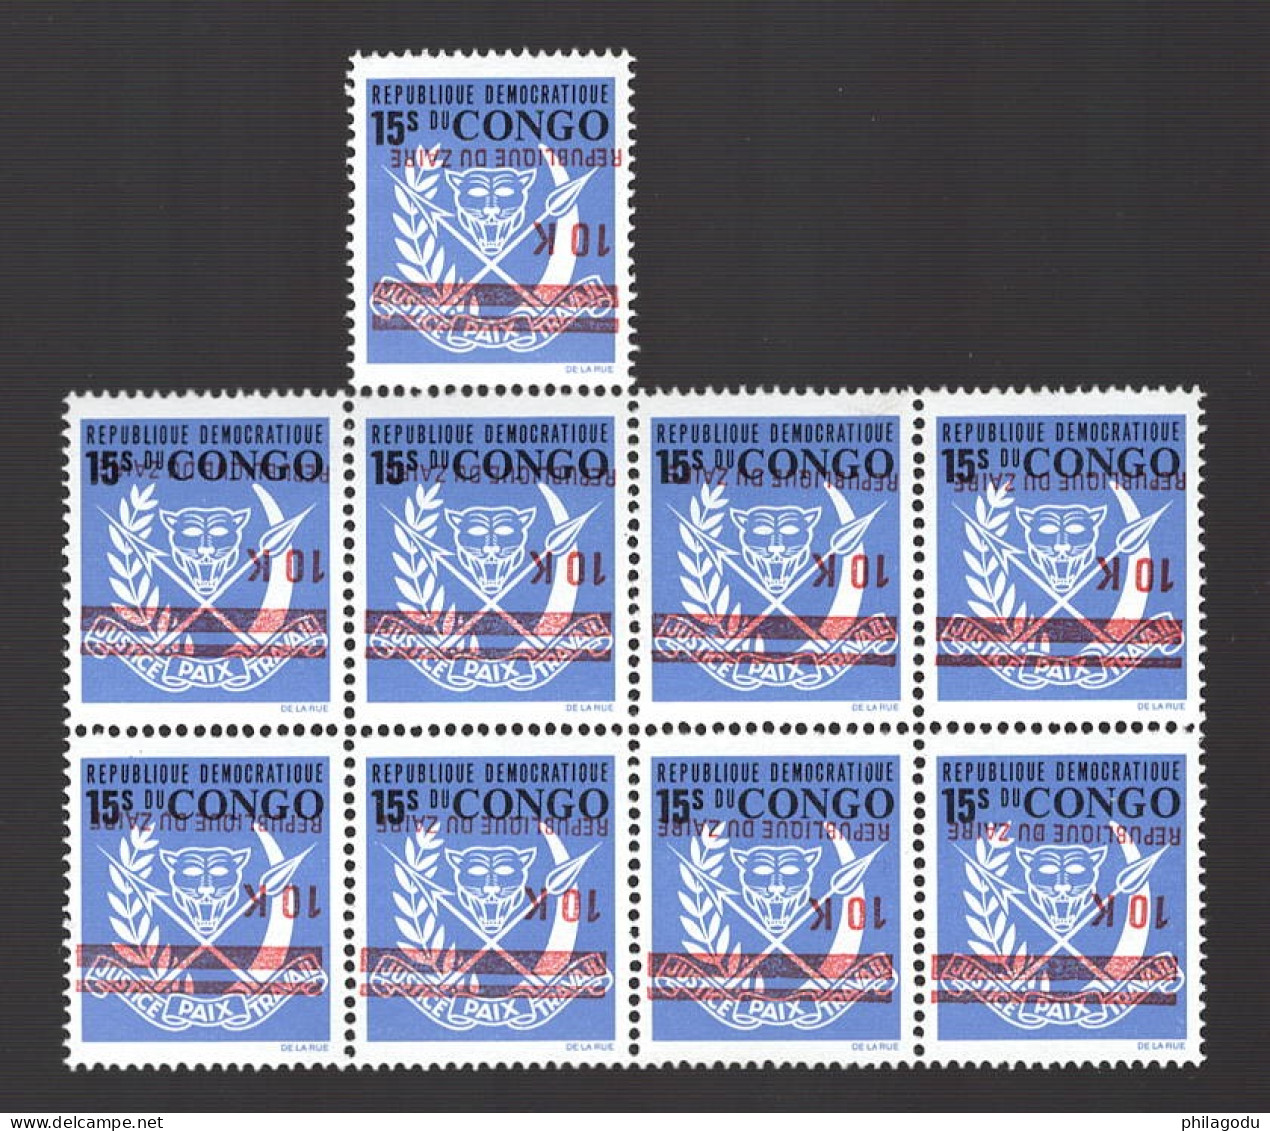 1977  Wappen Armoiries   913**  Surcharge Renversée  Inverted Overprint    **. Postfris Bloc De 8+1 - Ungebraucht